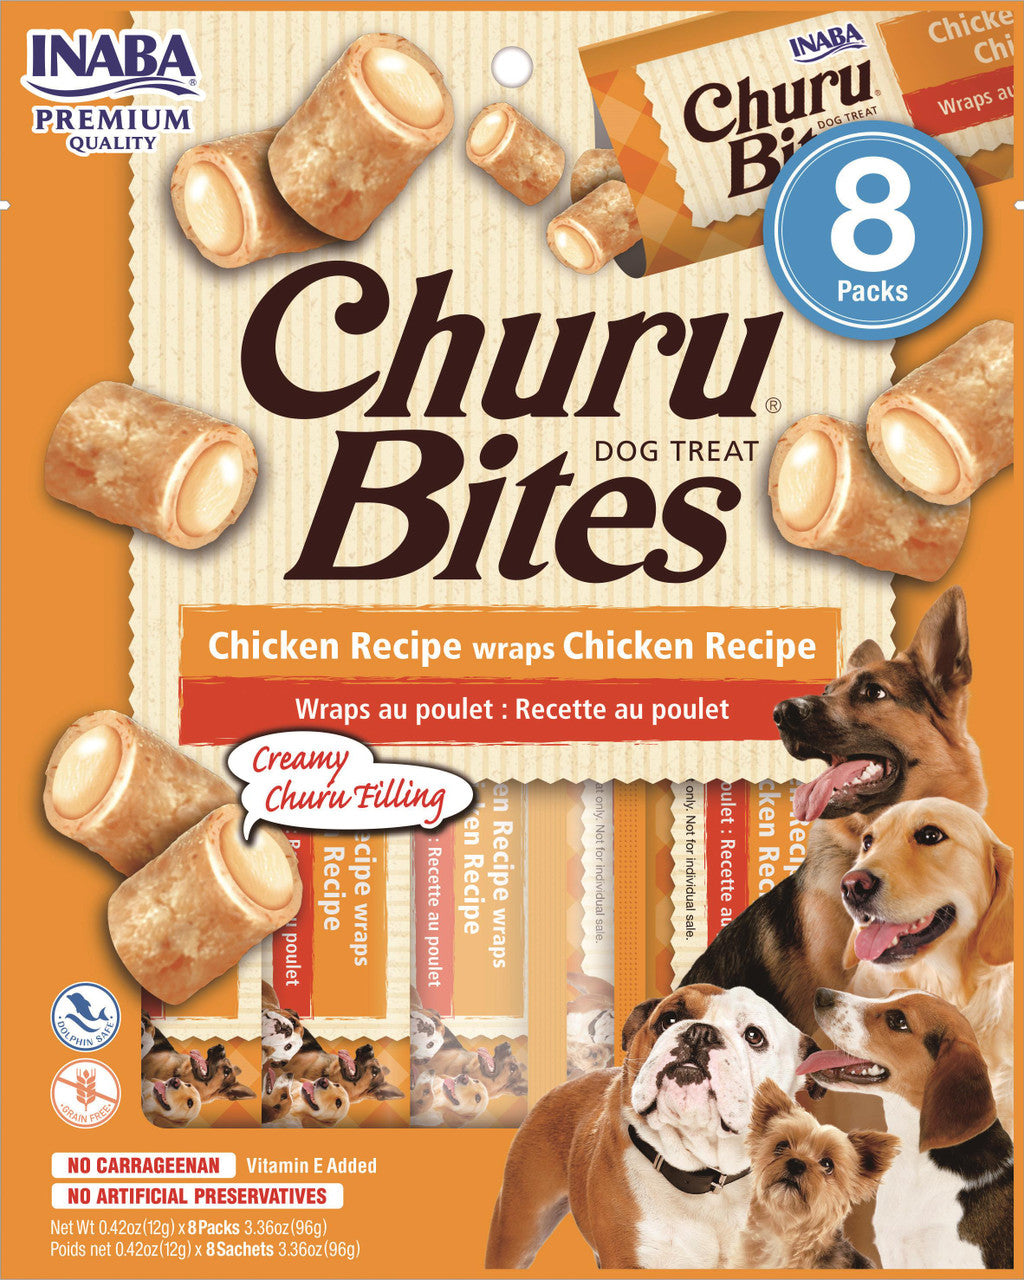 Inaba Dog Churu Bites Chicken Recipe Wraps Treat 6 / 4.2 oz 10850006715548